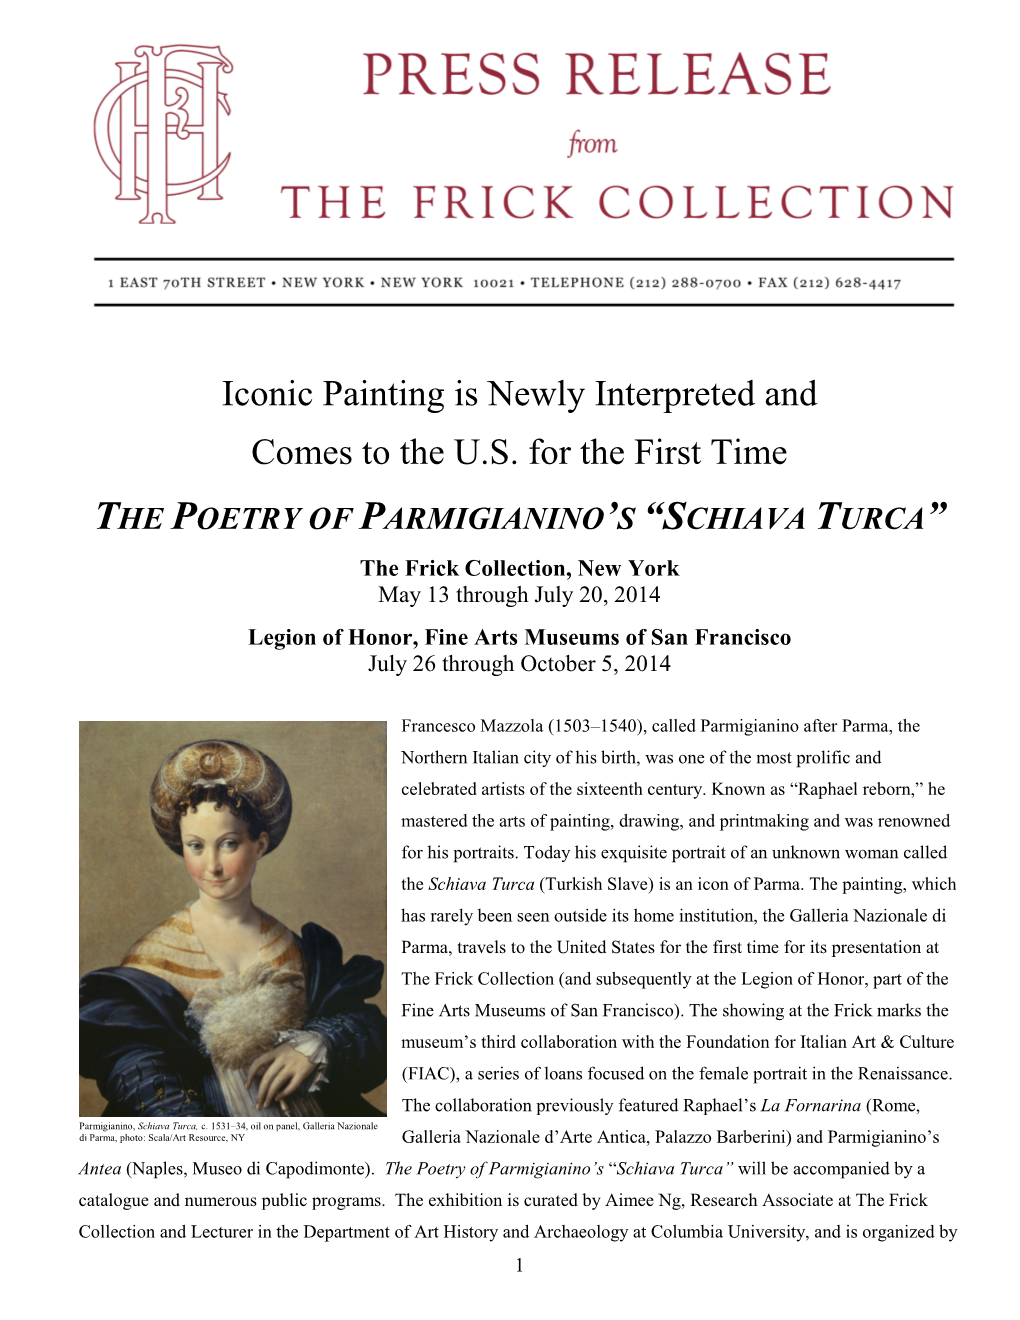 The Poetry of Parmigianino's “Schiava Turca”